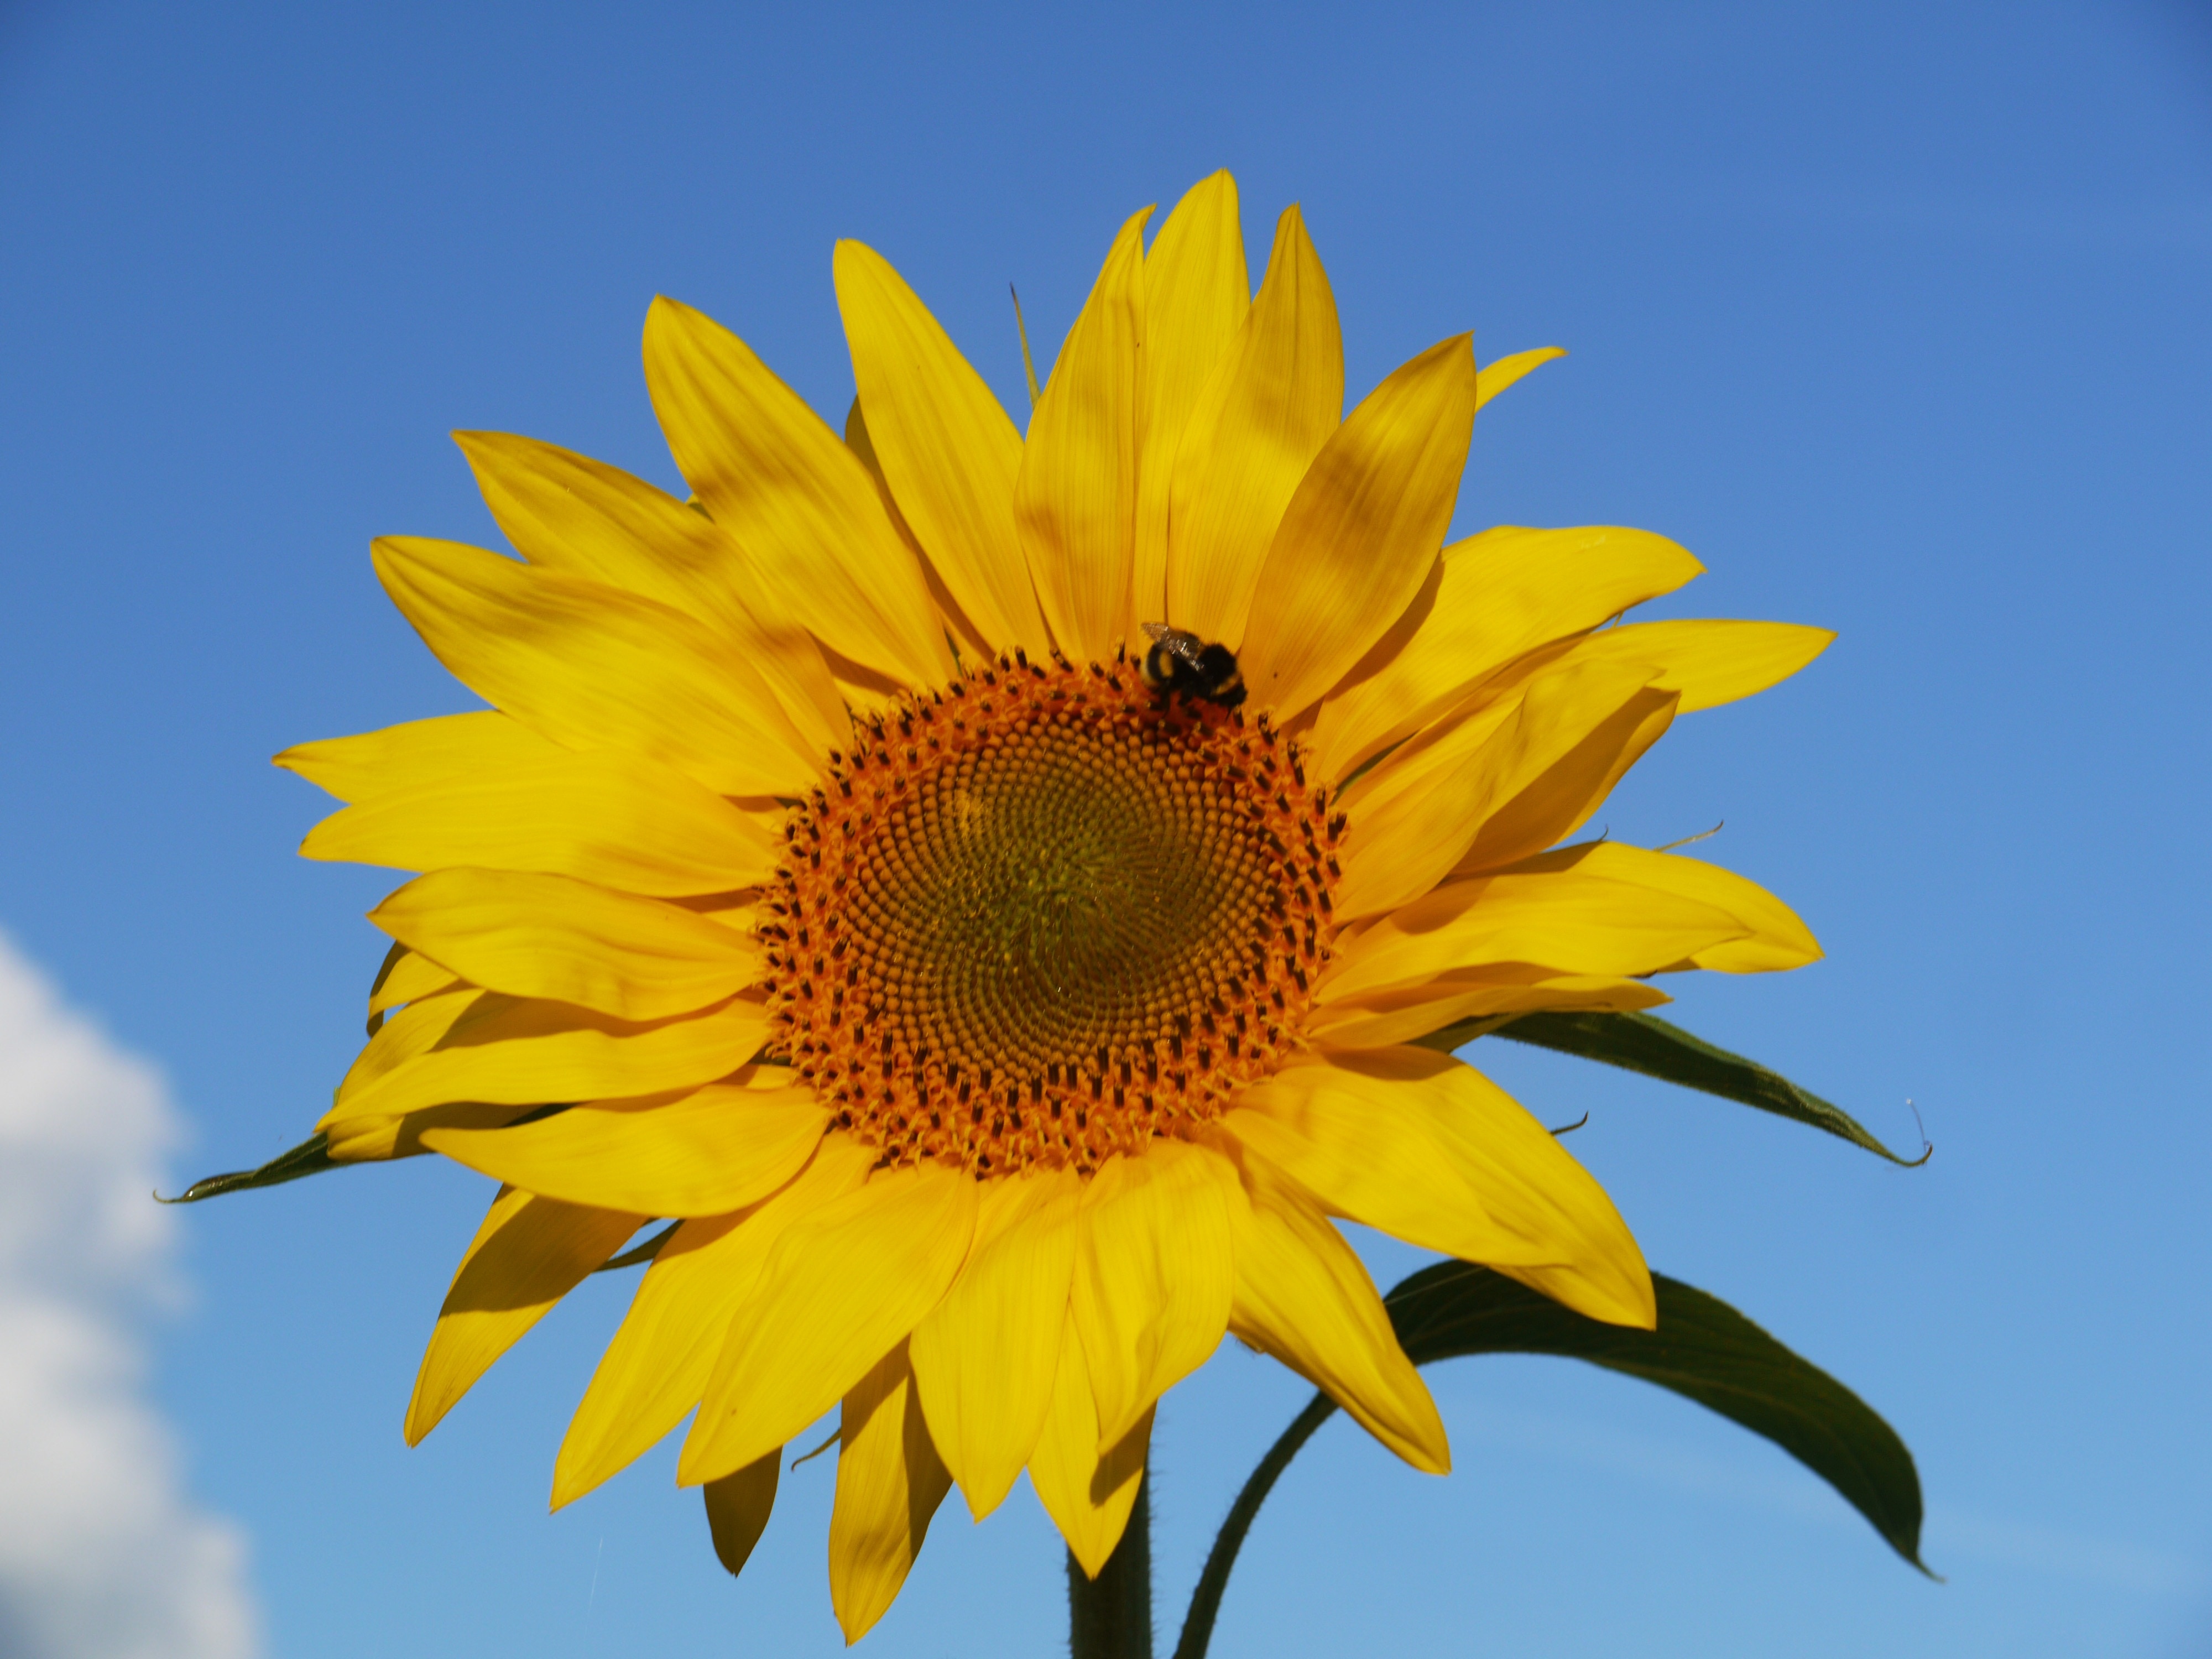 sunflower illustration